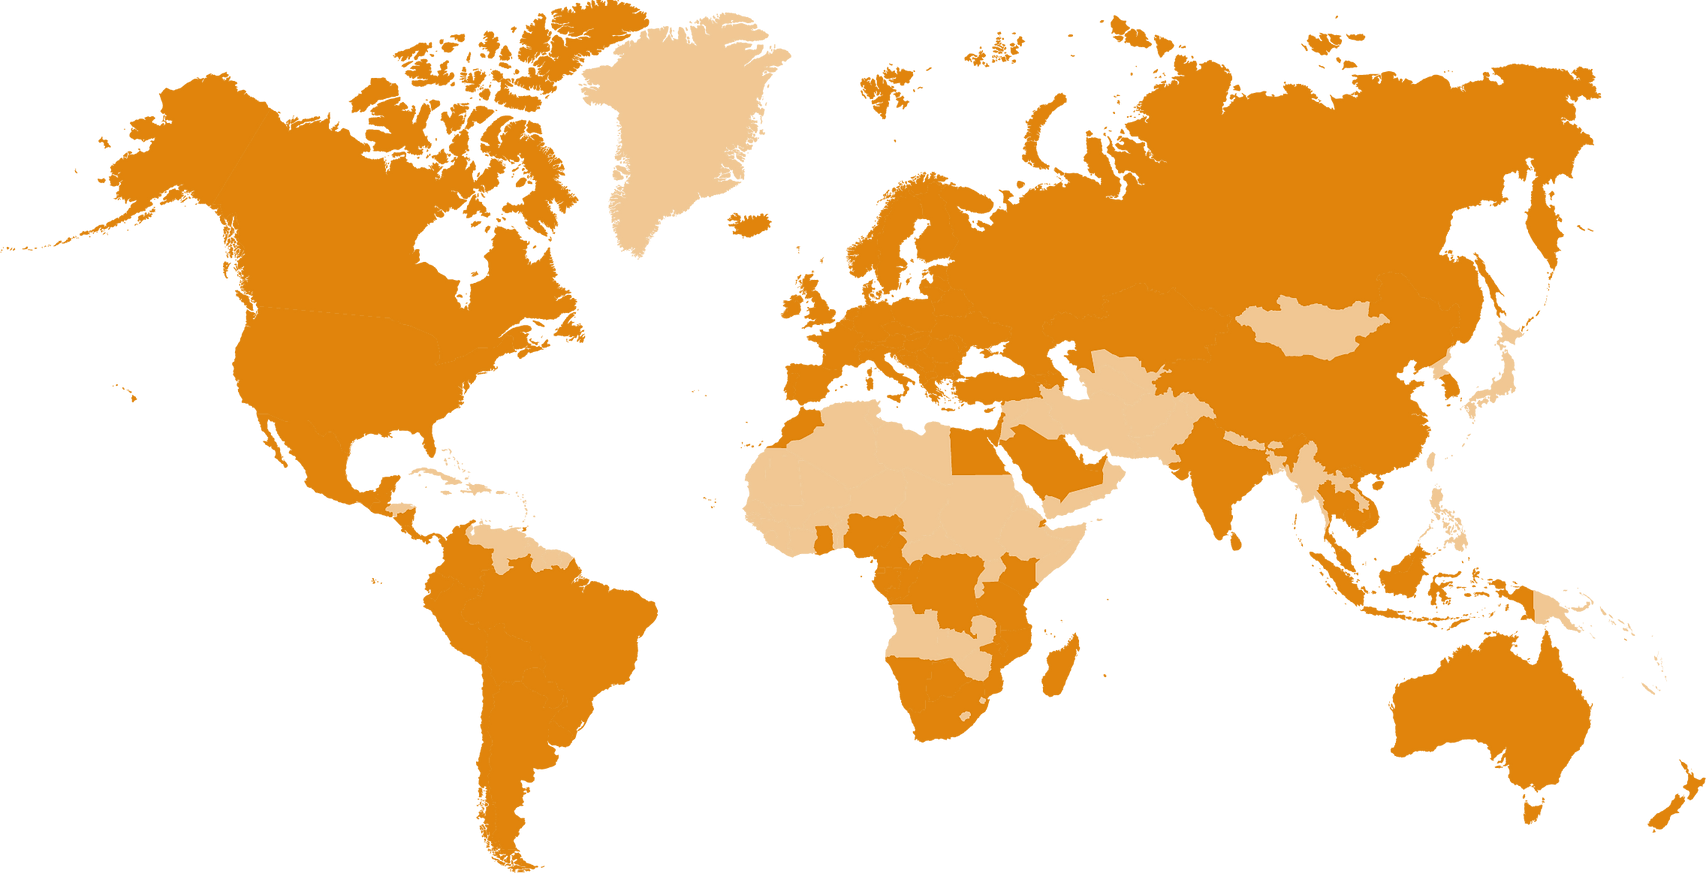 ICU CLOM Cobertura Mapa del mundo